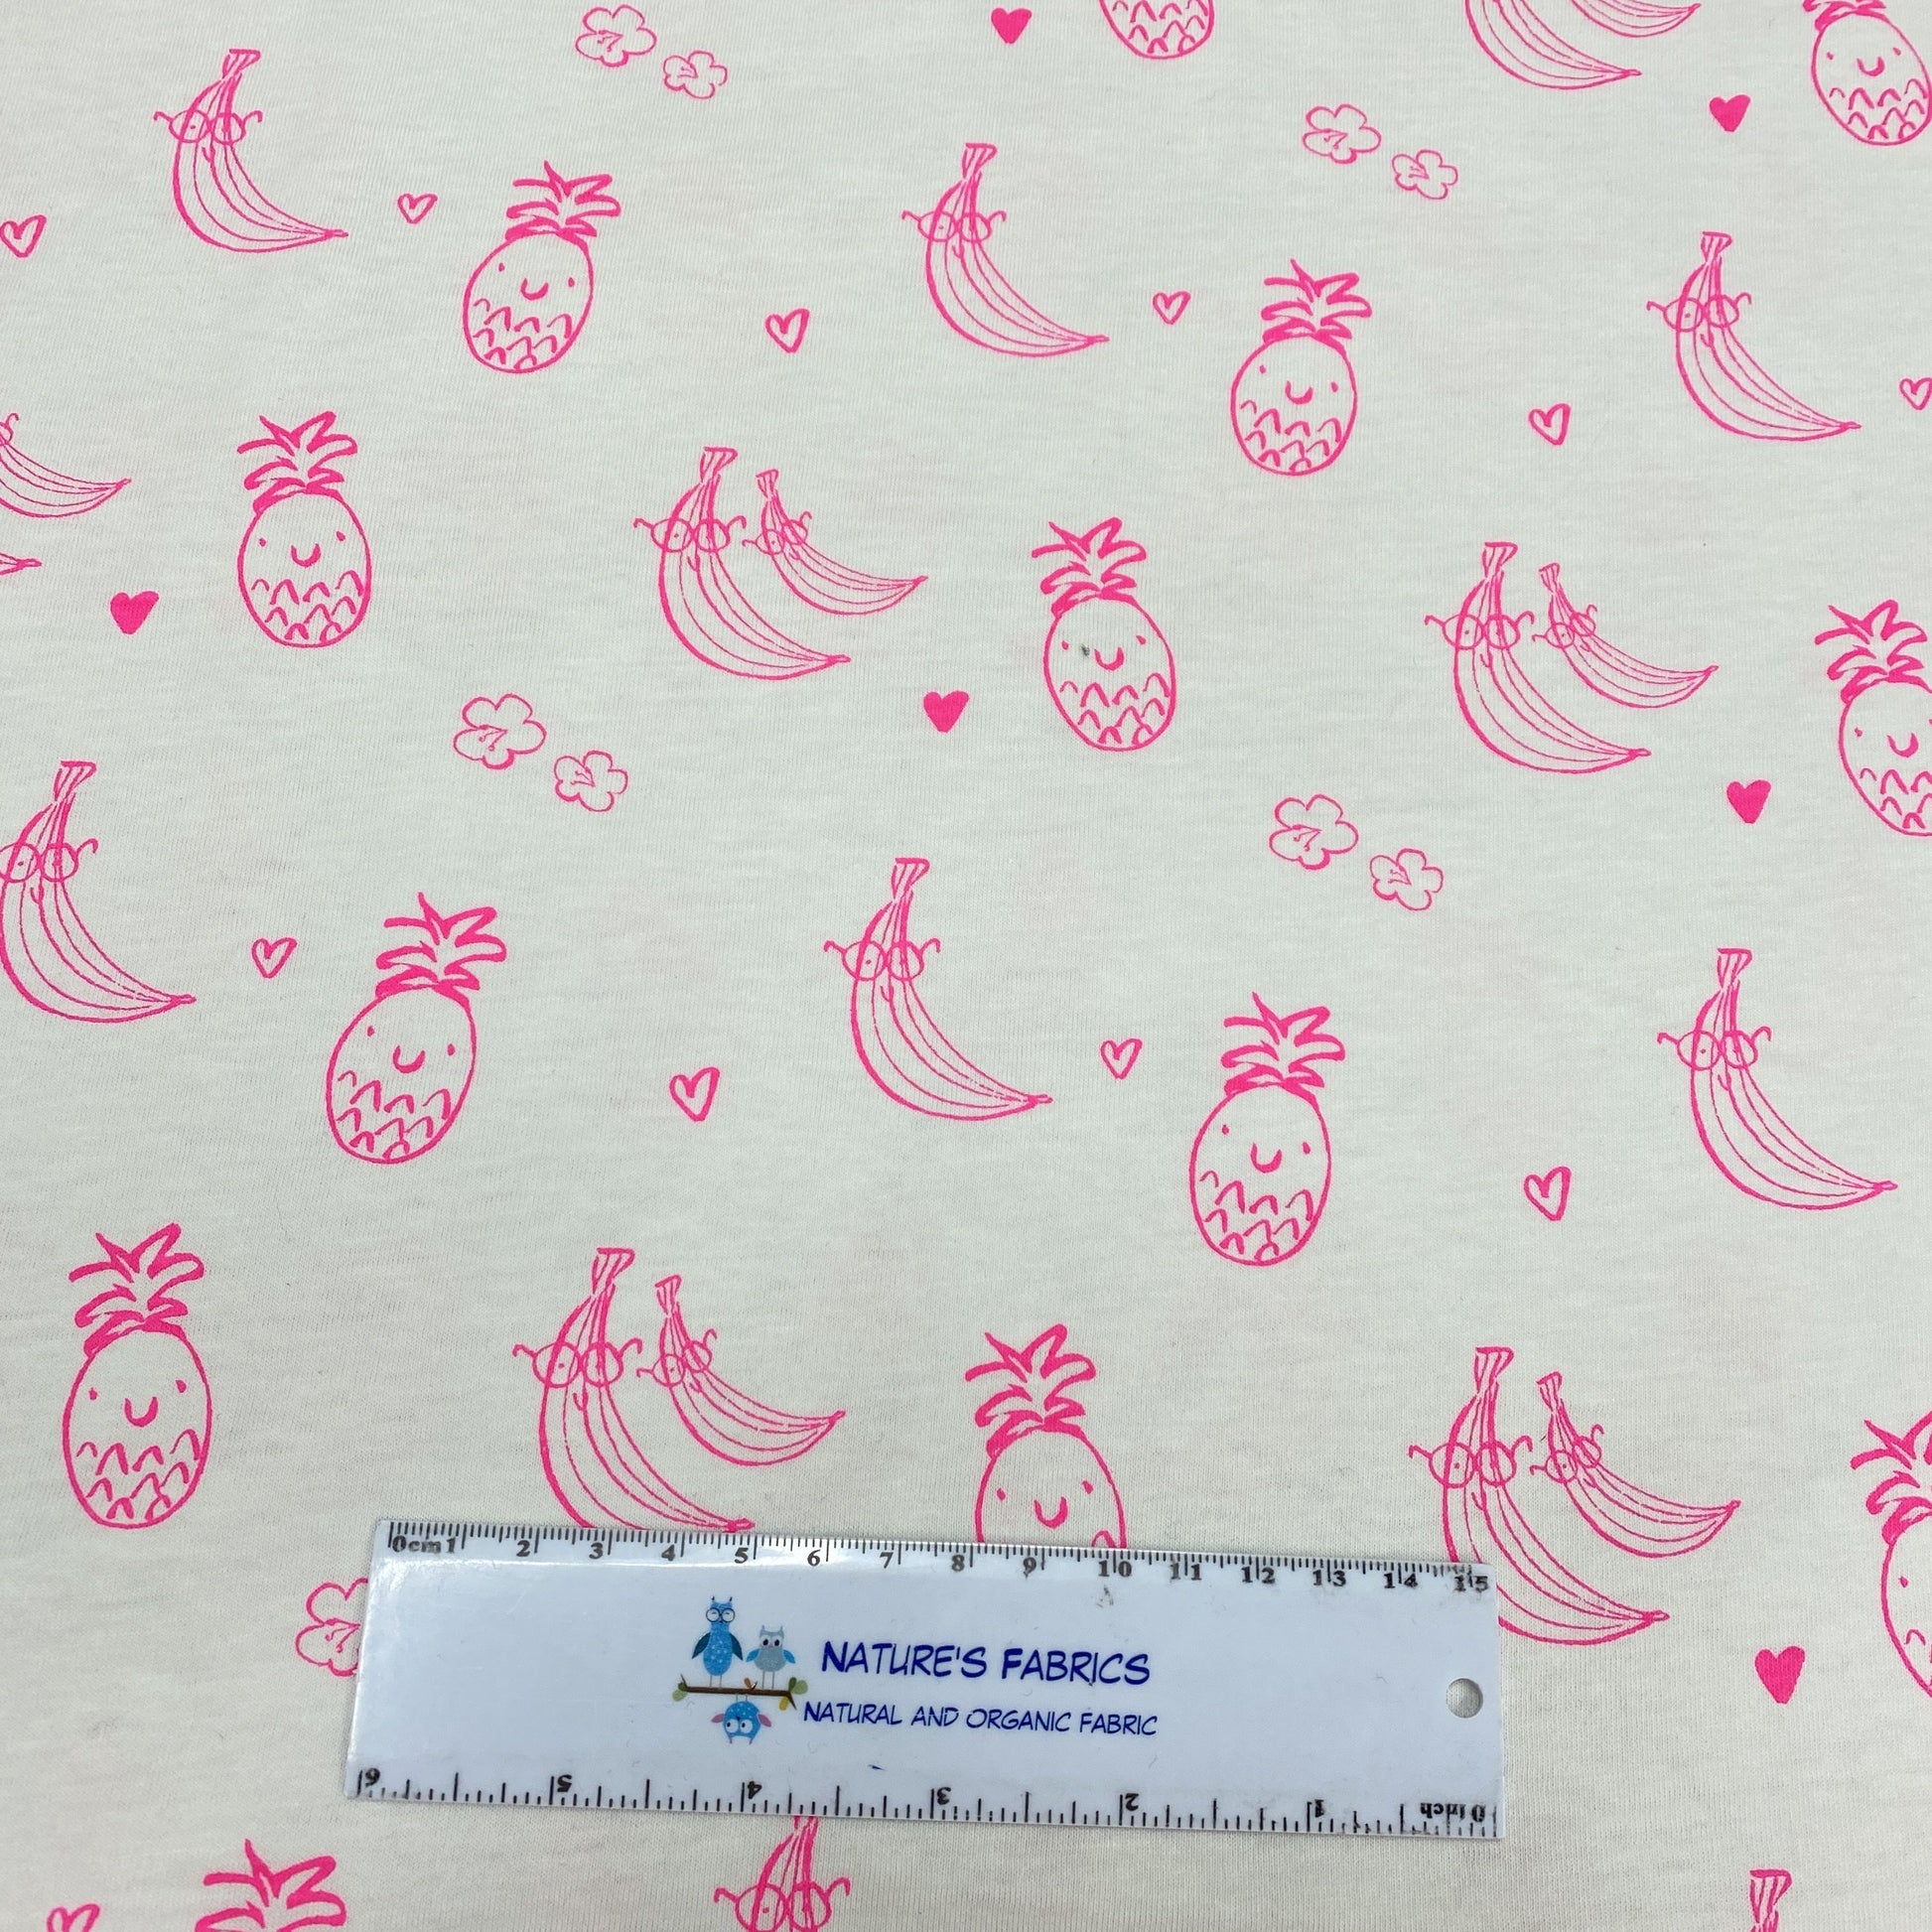 Hot Pink Tropical Fruit on Organic Cotton Jersey - Nature's Fabrics